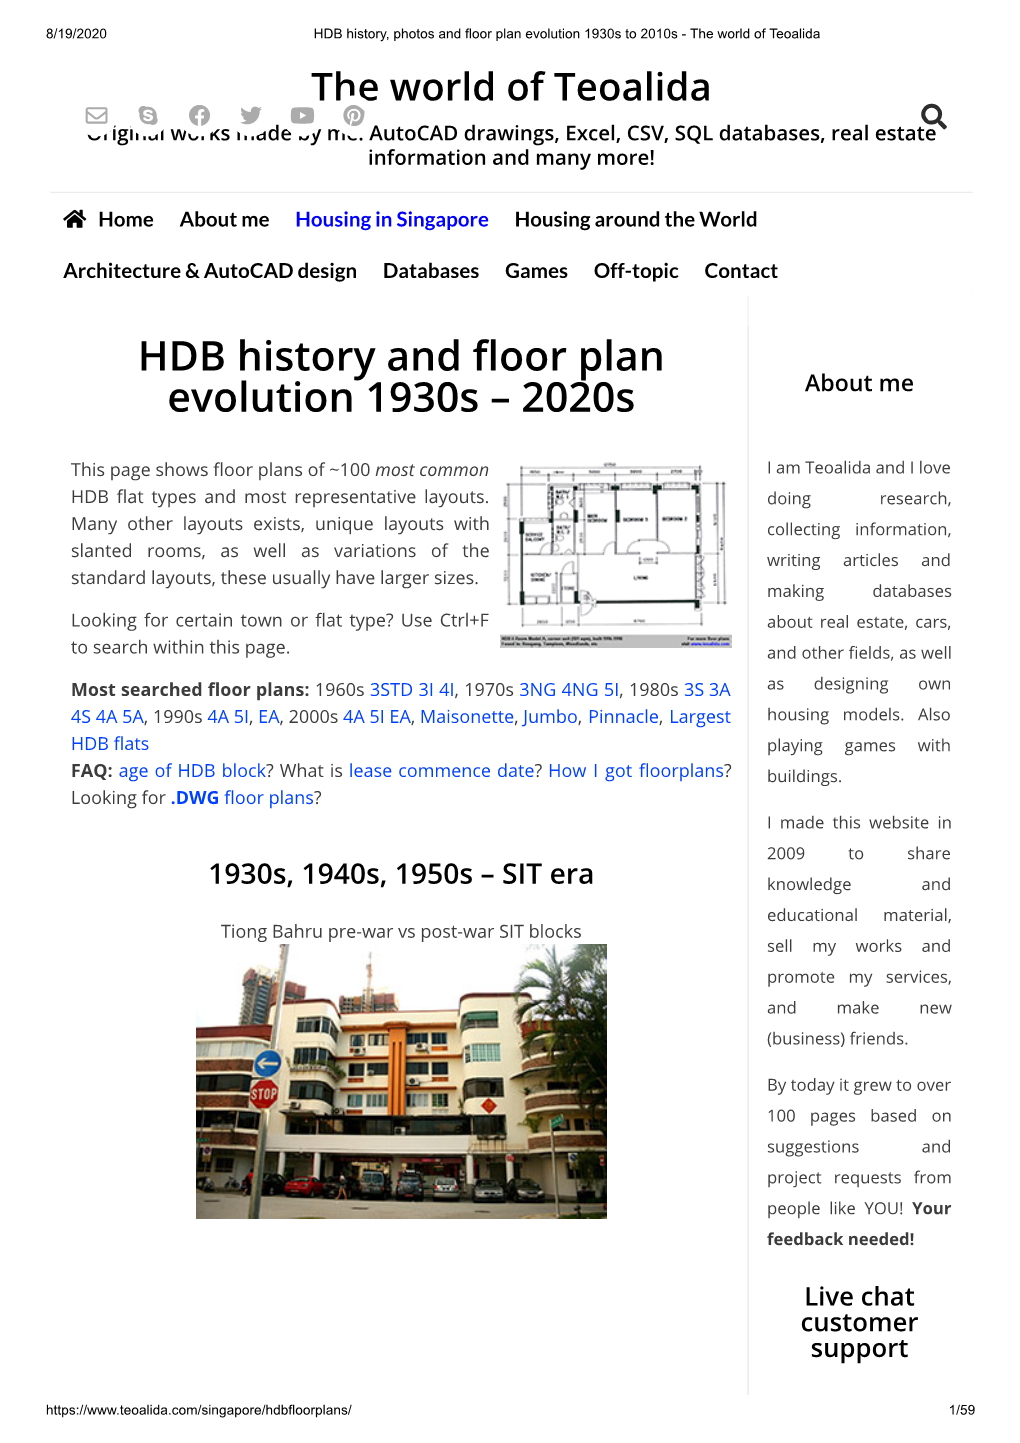 HDB History and Floor Plan Evolution 1930S